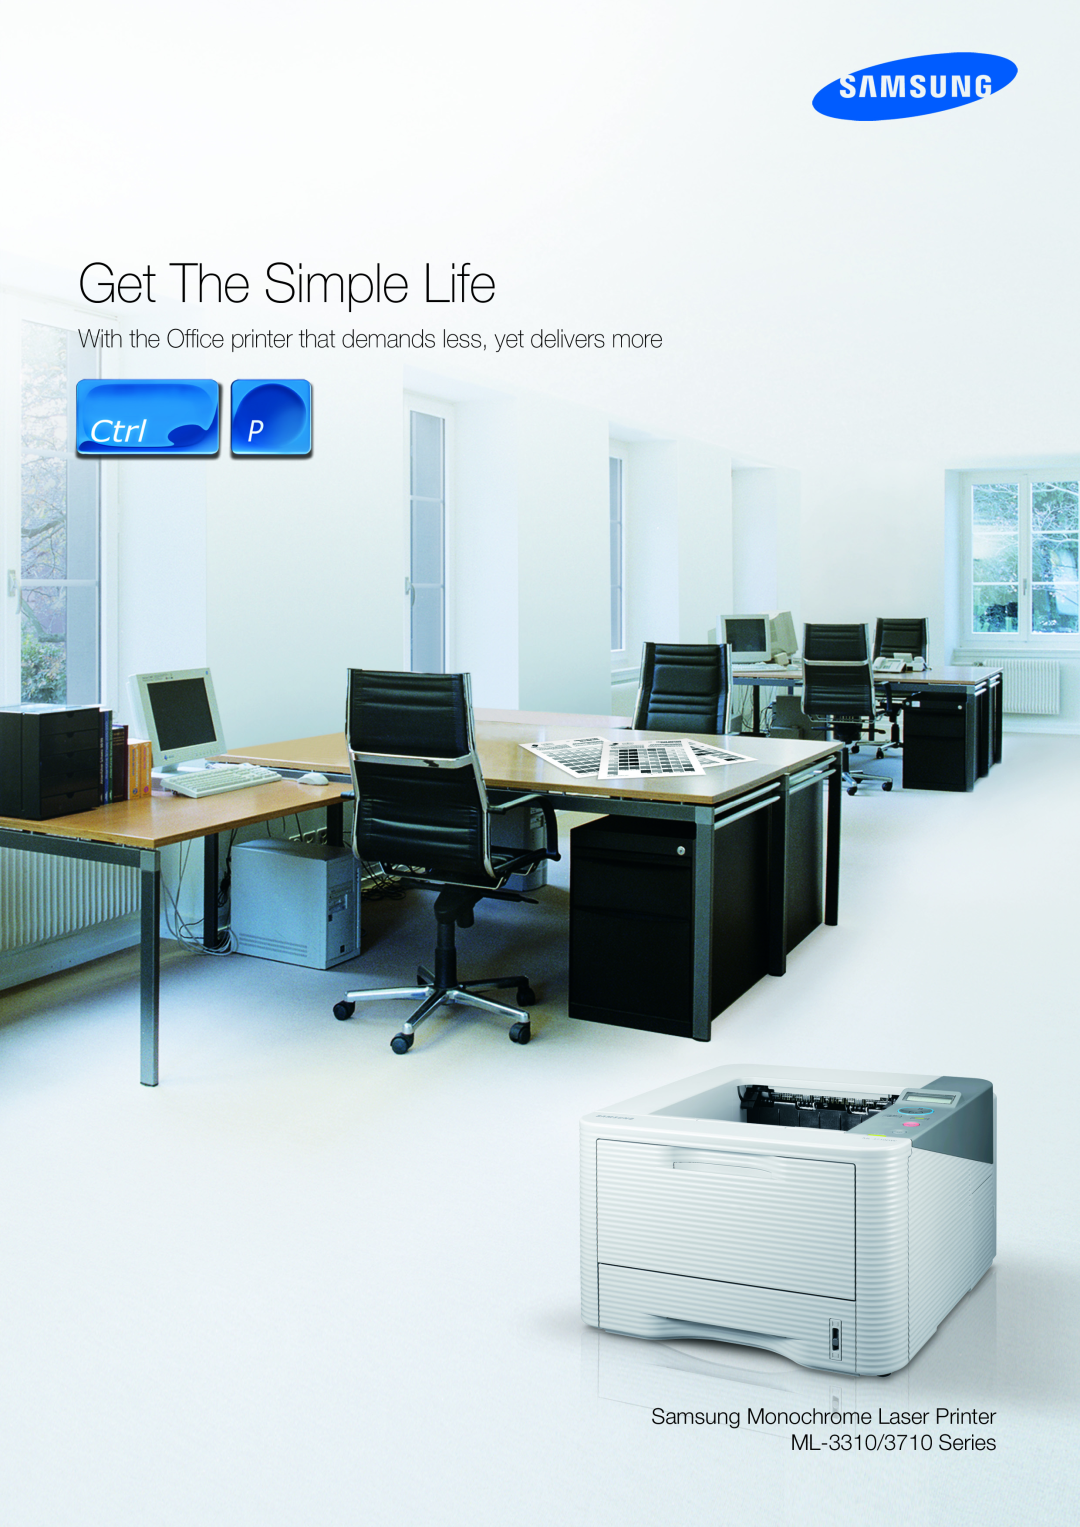 Samsung manual Samsung Monochrome Laser Printer ML-3310/3710 Series, Get The Simple Life 